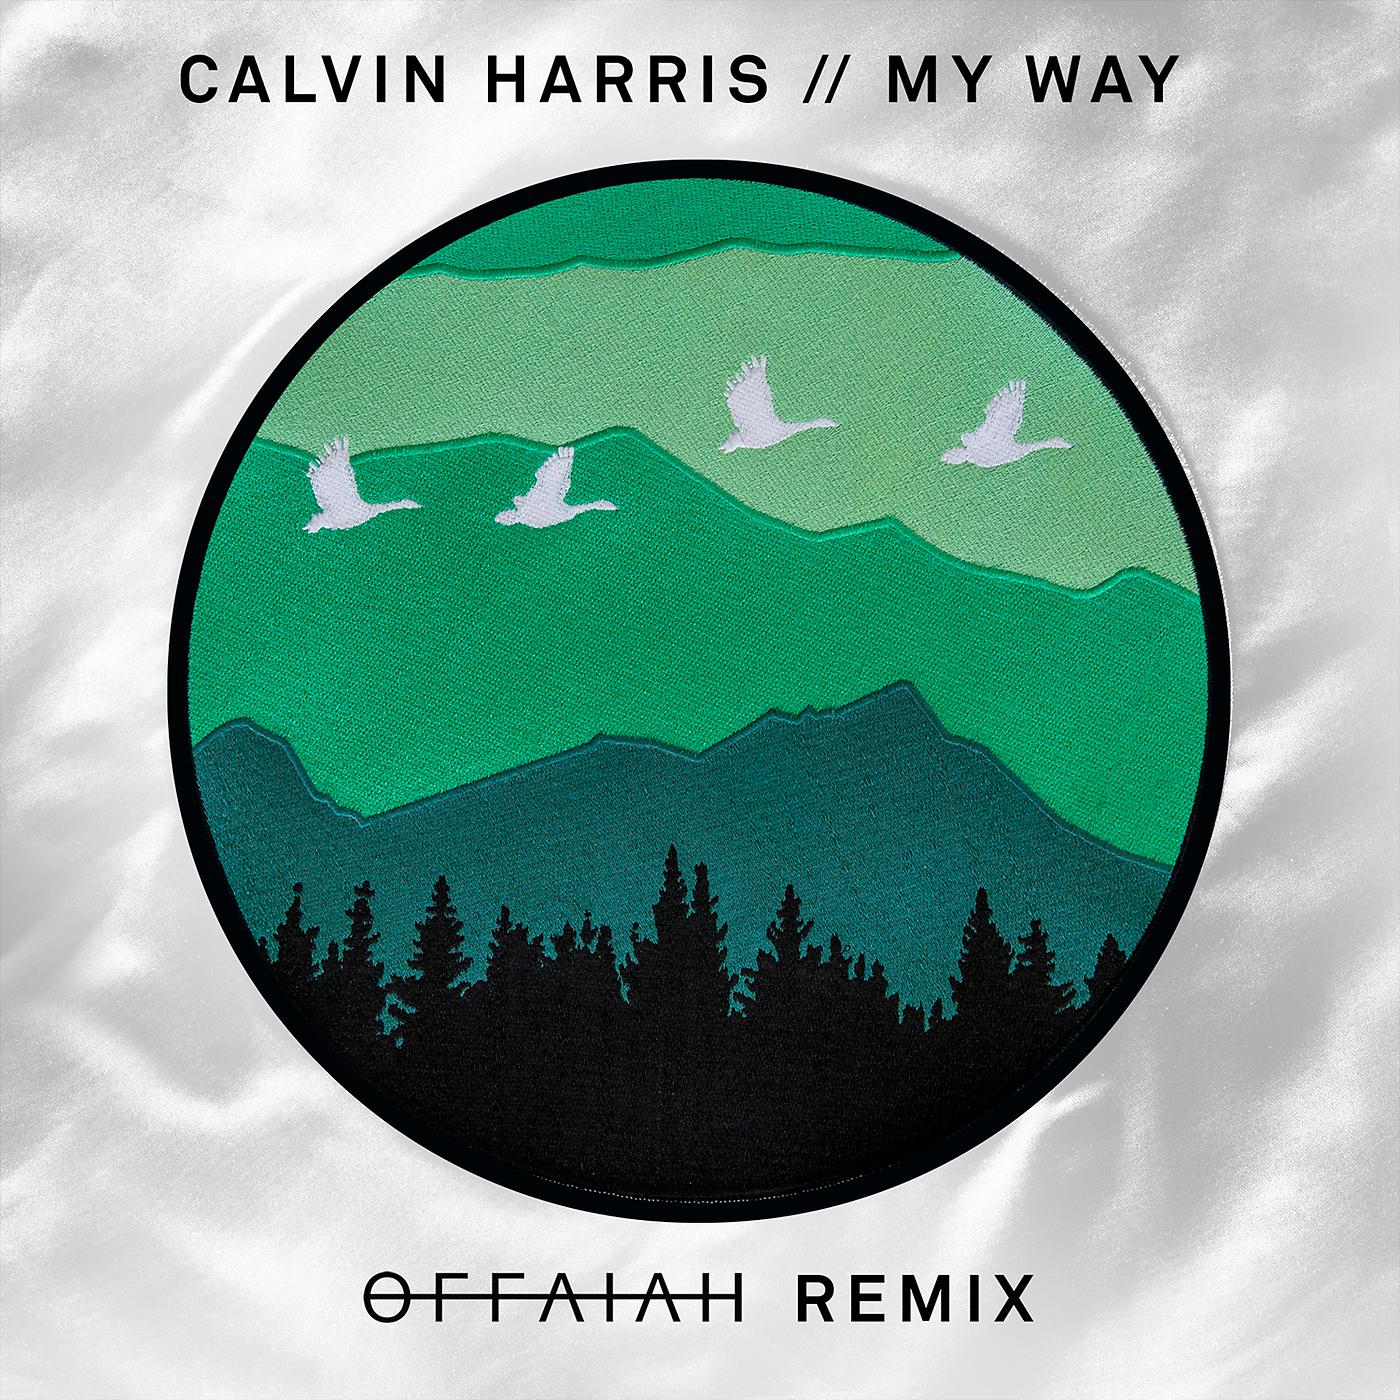 Way way ремикс песню. Calvin Harris my way. My way Кельвин Харрис. Calvin Harris обложка альбома. Кельвин Харрис обложки альбомов.